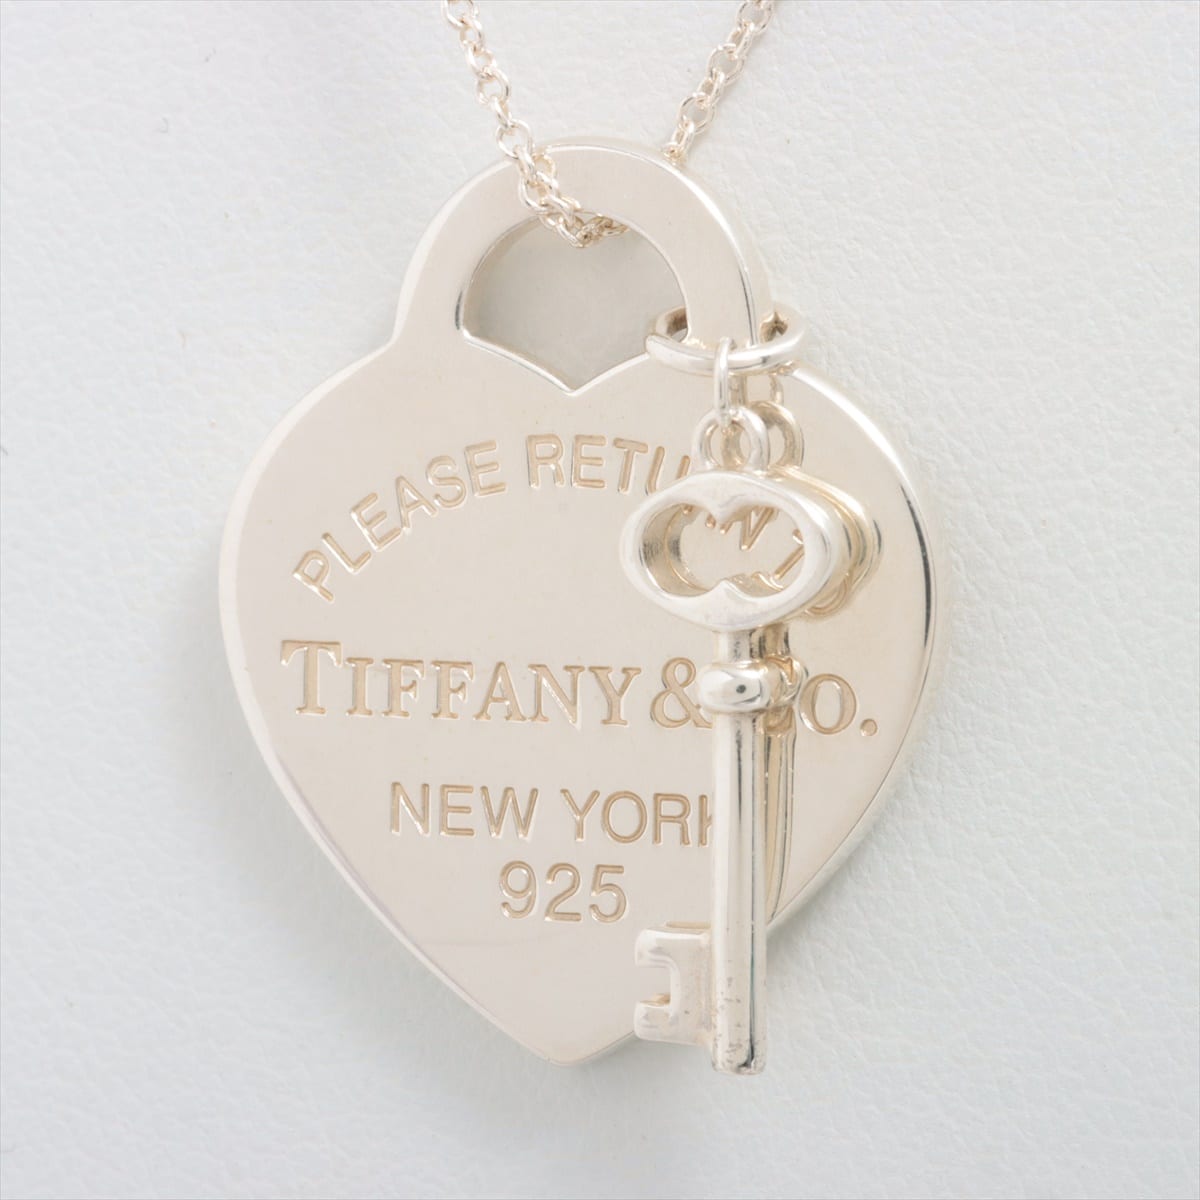 Tiffany Return To Tiffany Heart Key Necklace 925 6.9g Silver